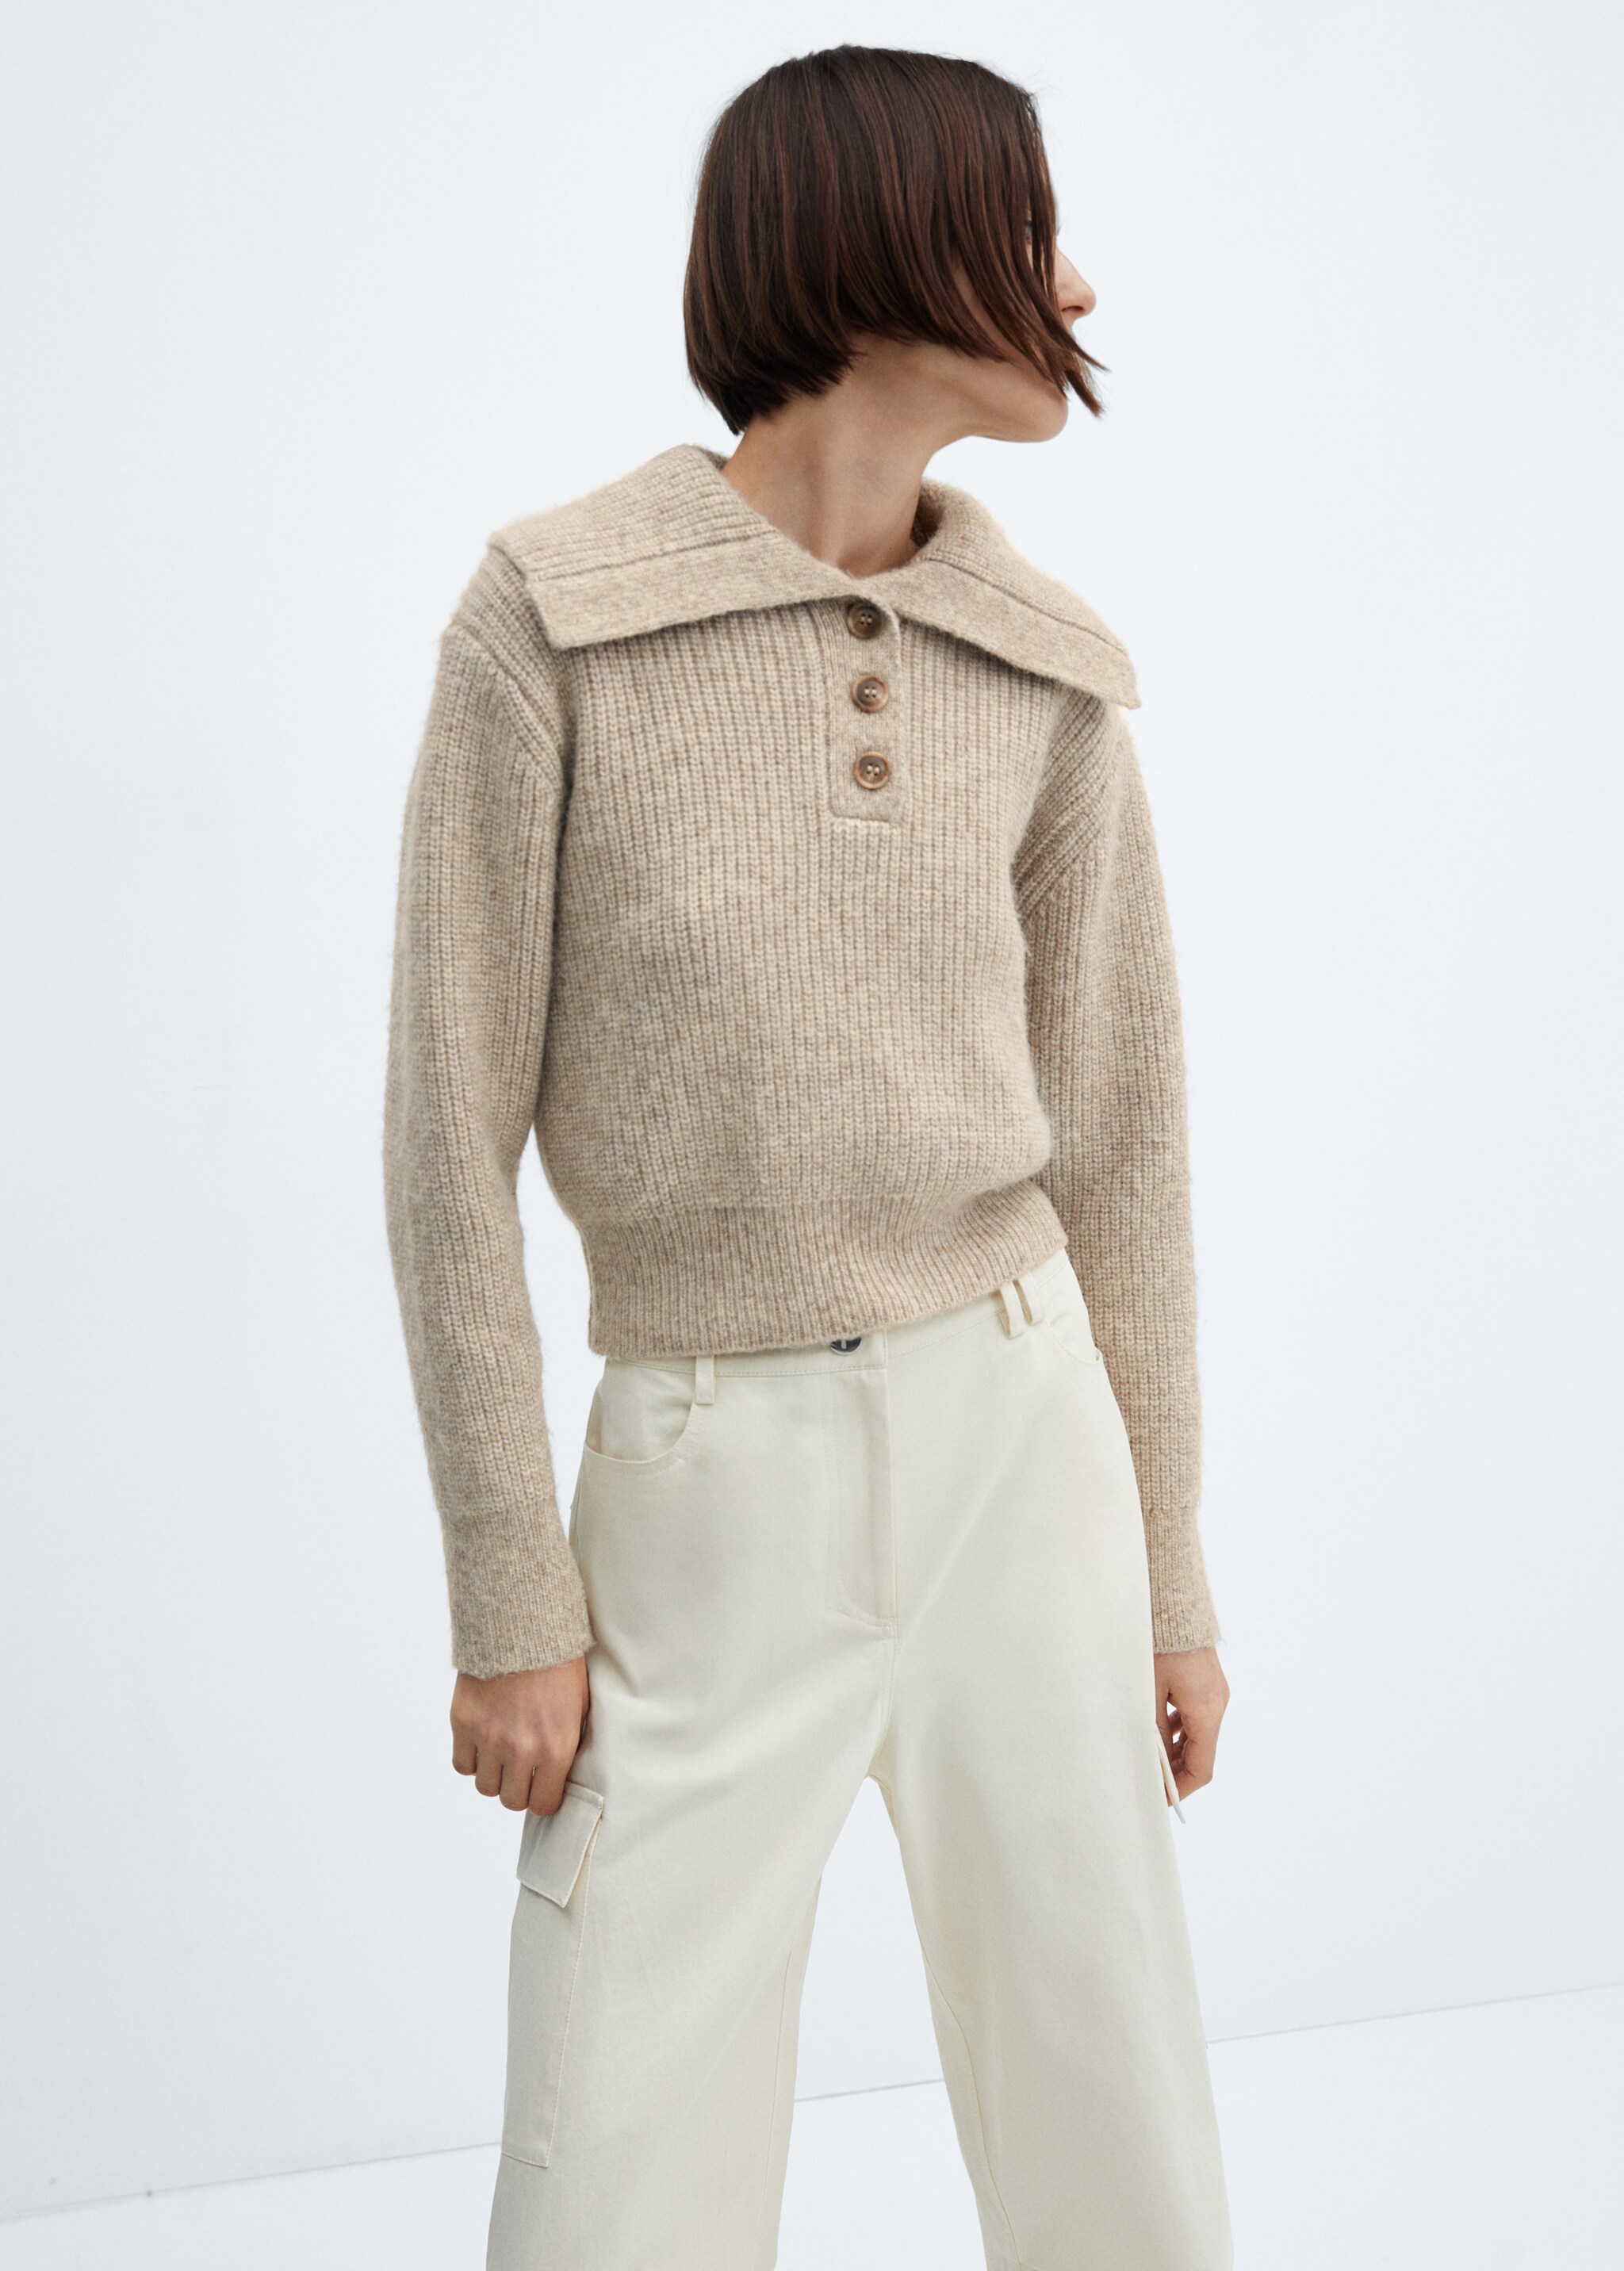 Camp-collar knit sweater - Medium plane